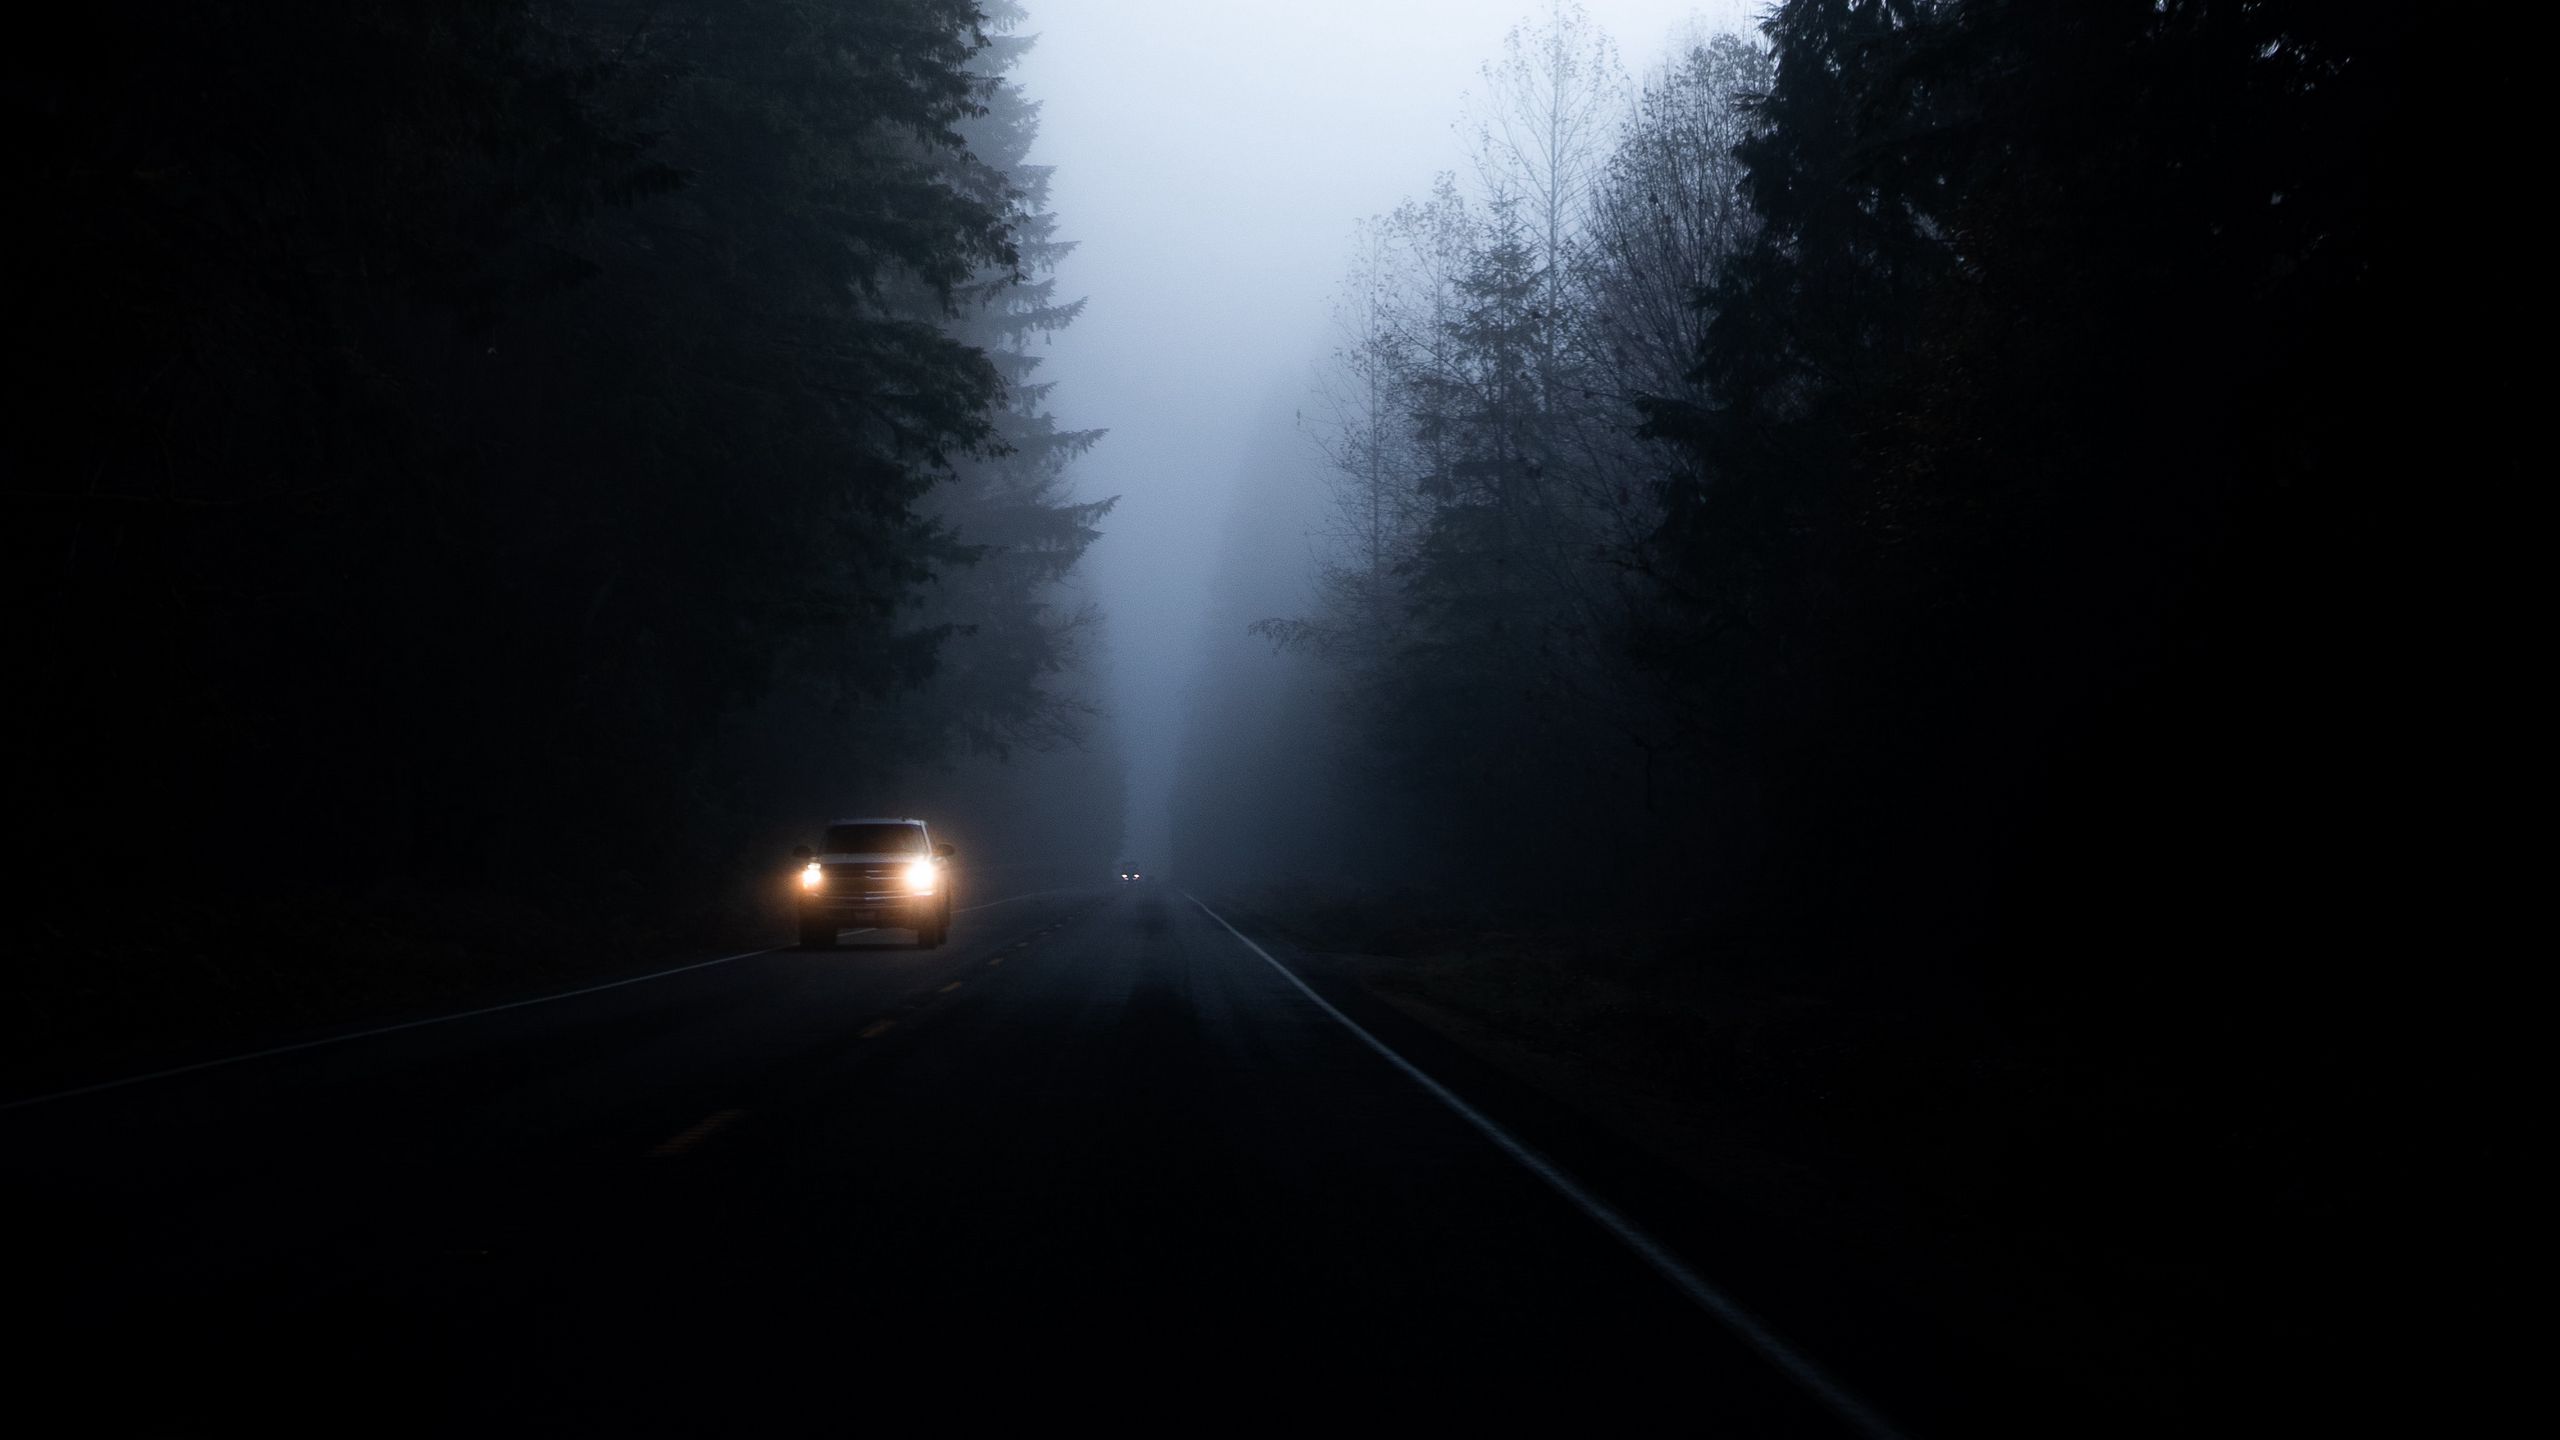 Download wallpaper 2560x1440 road, fog, dark, trees, car widescreen 16:9 HD background